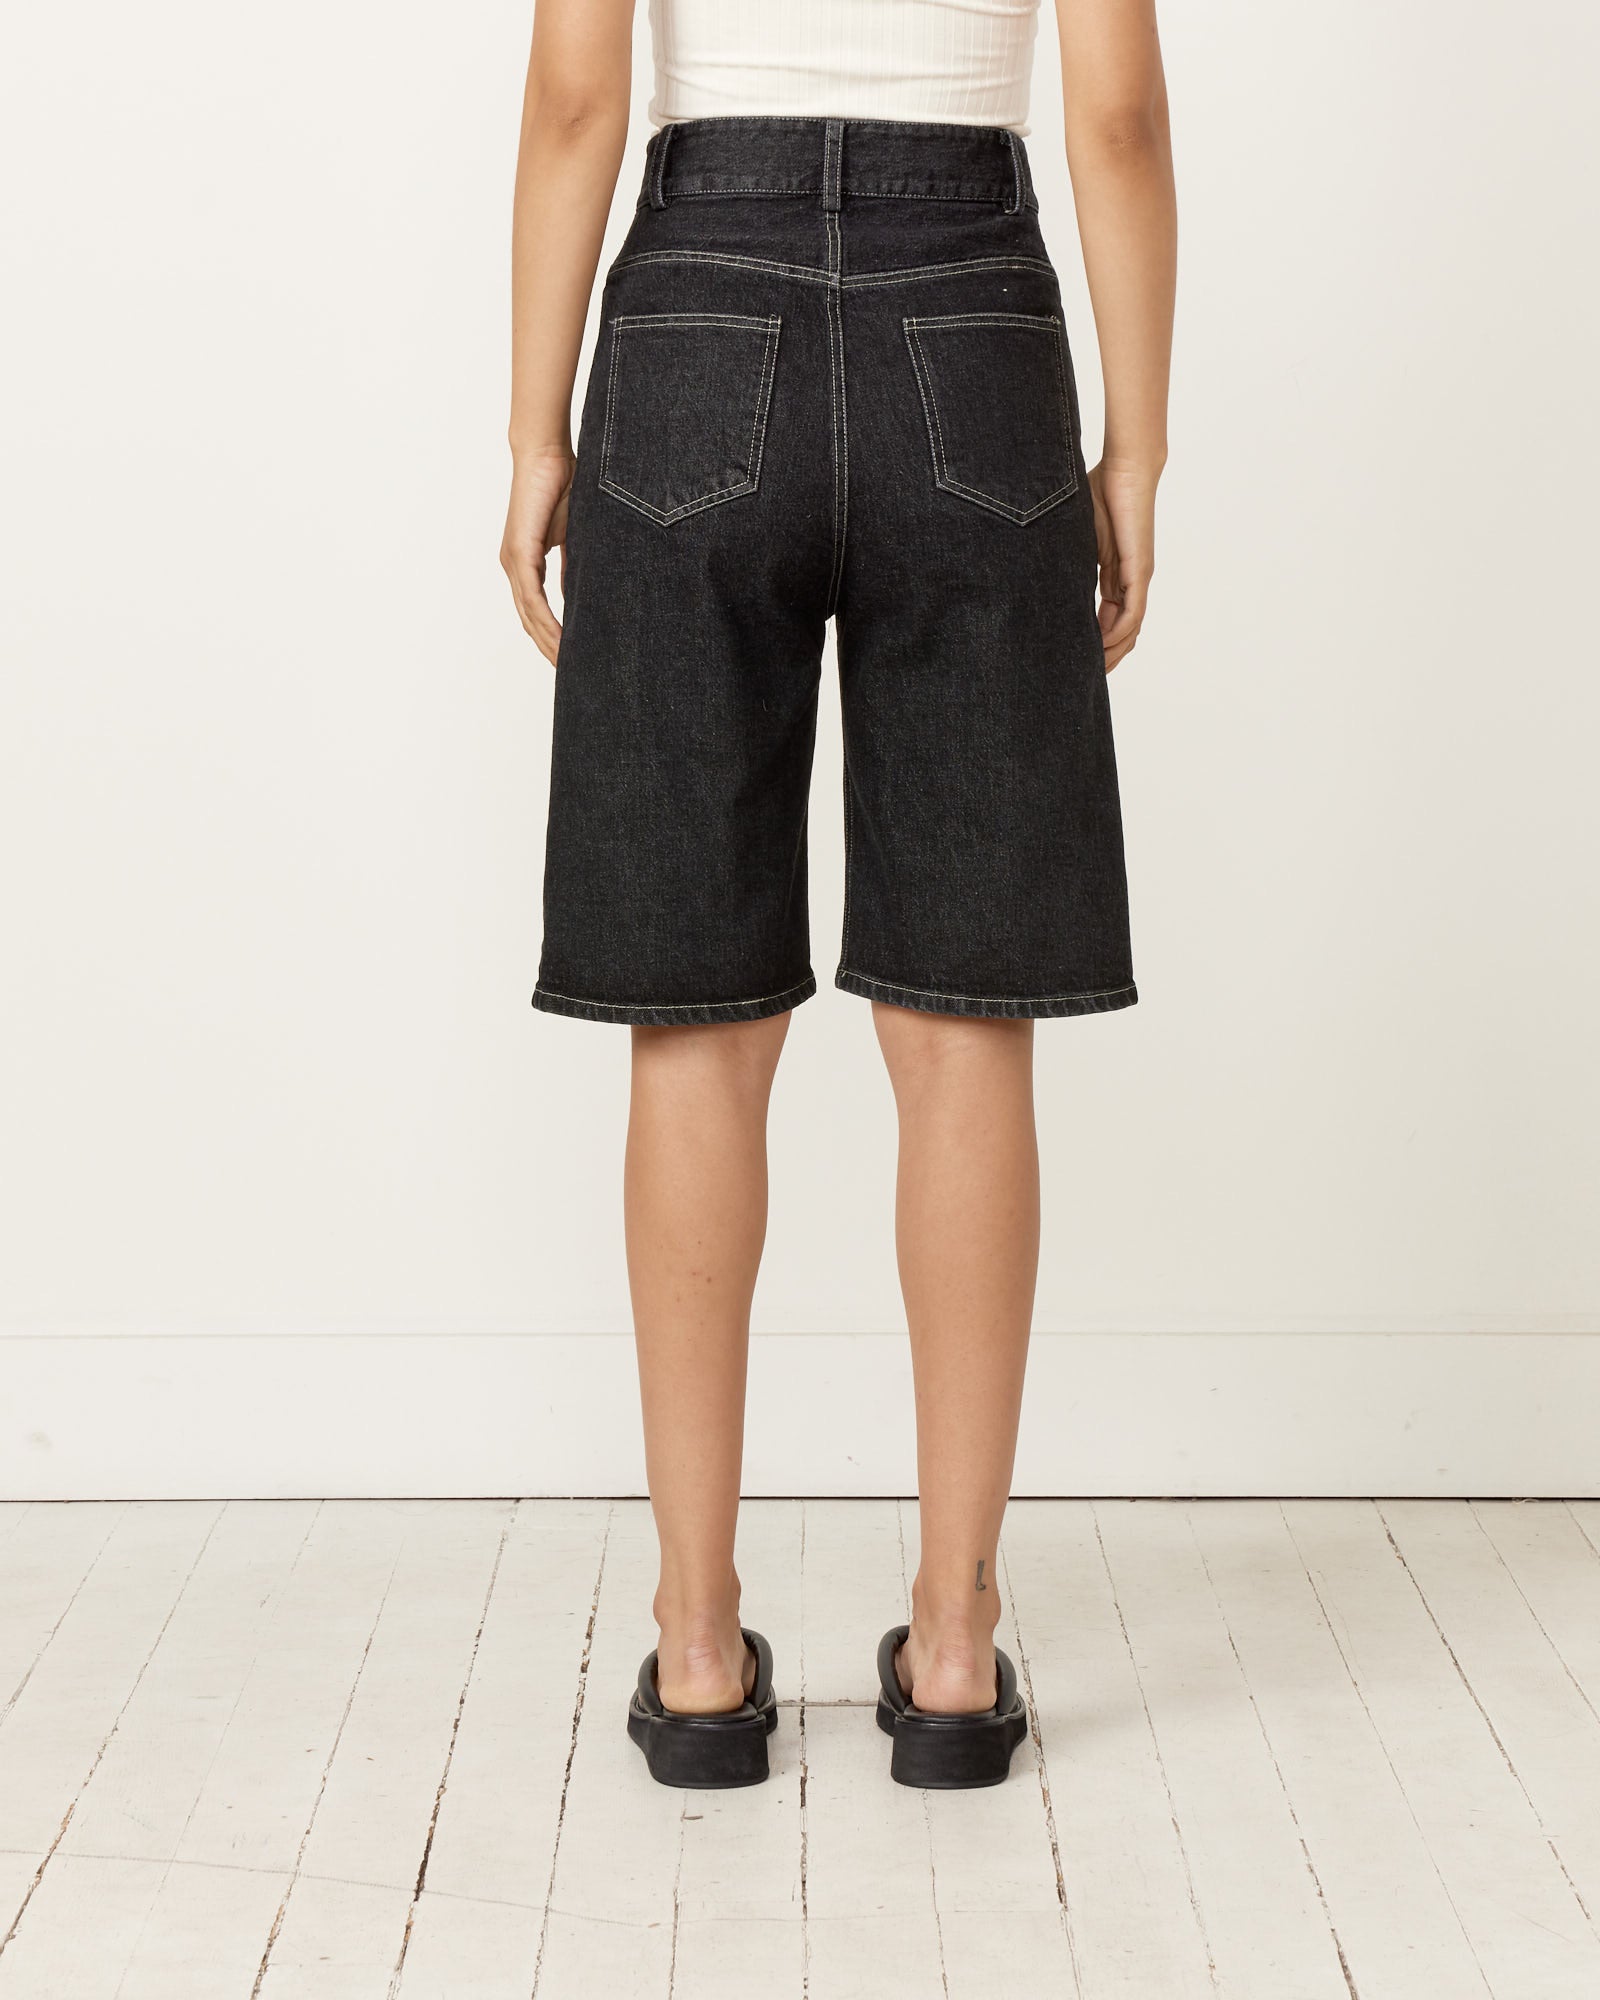 Stonewash Denim Shorts in Black